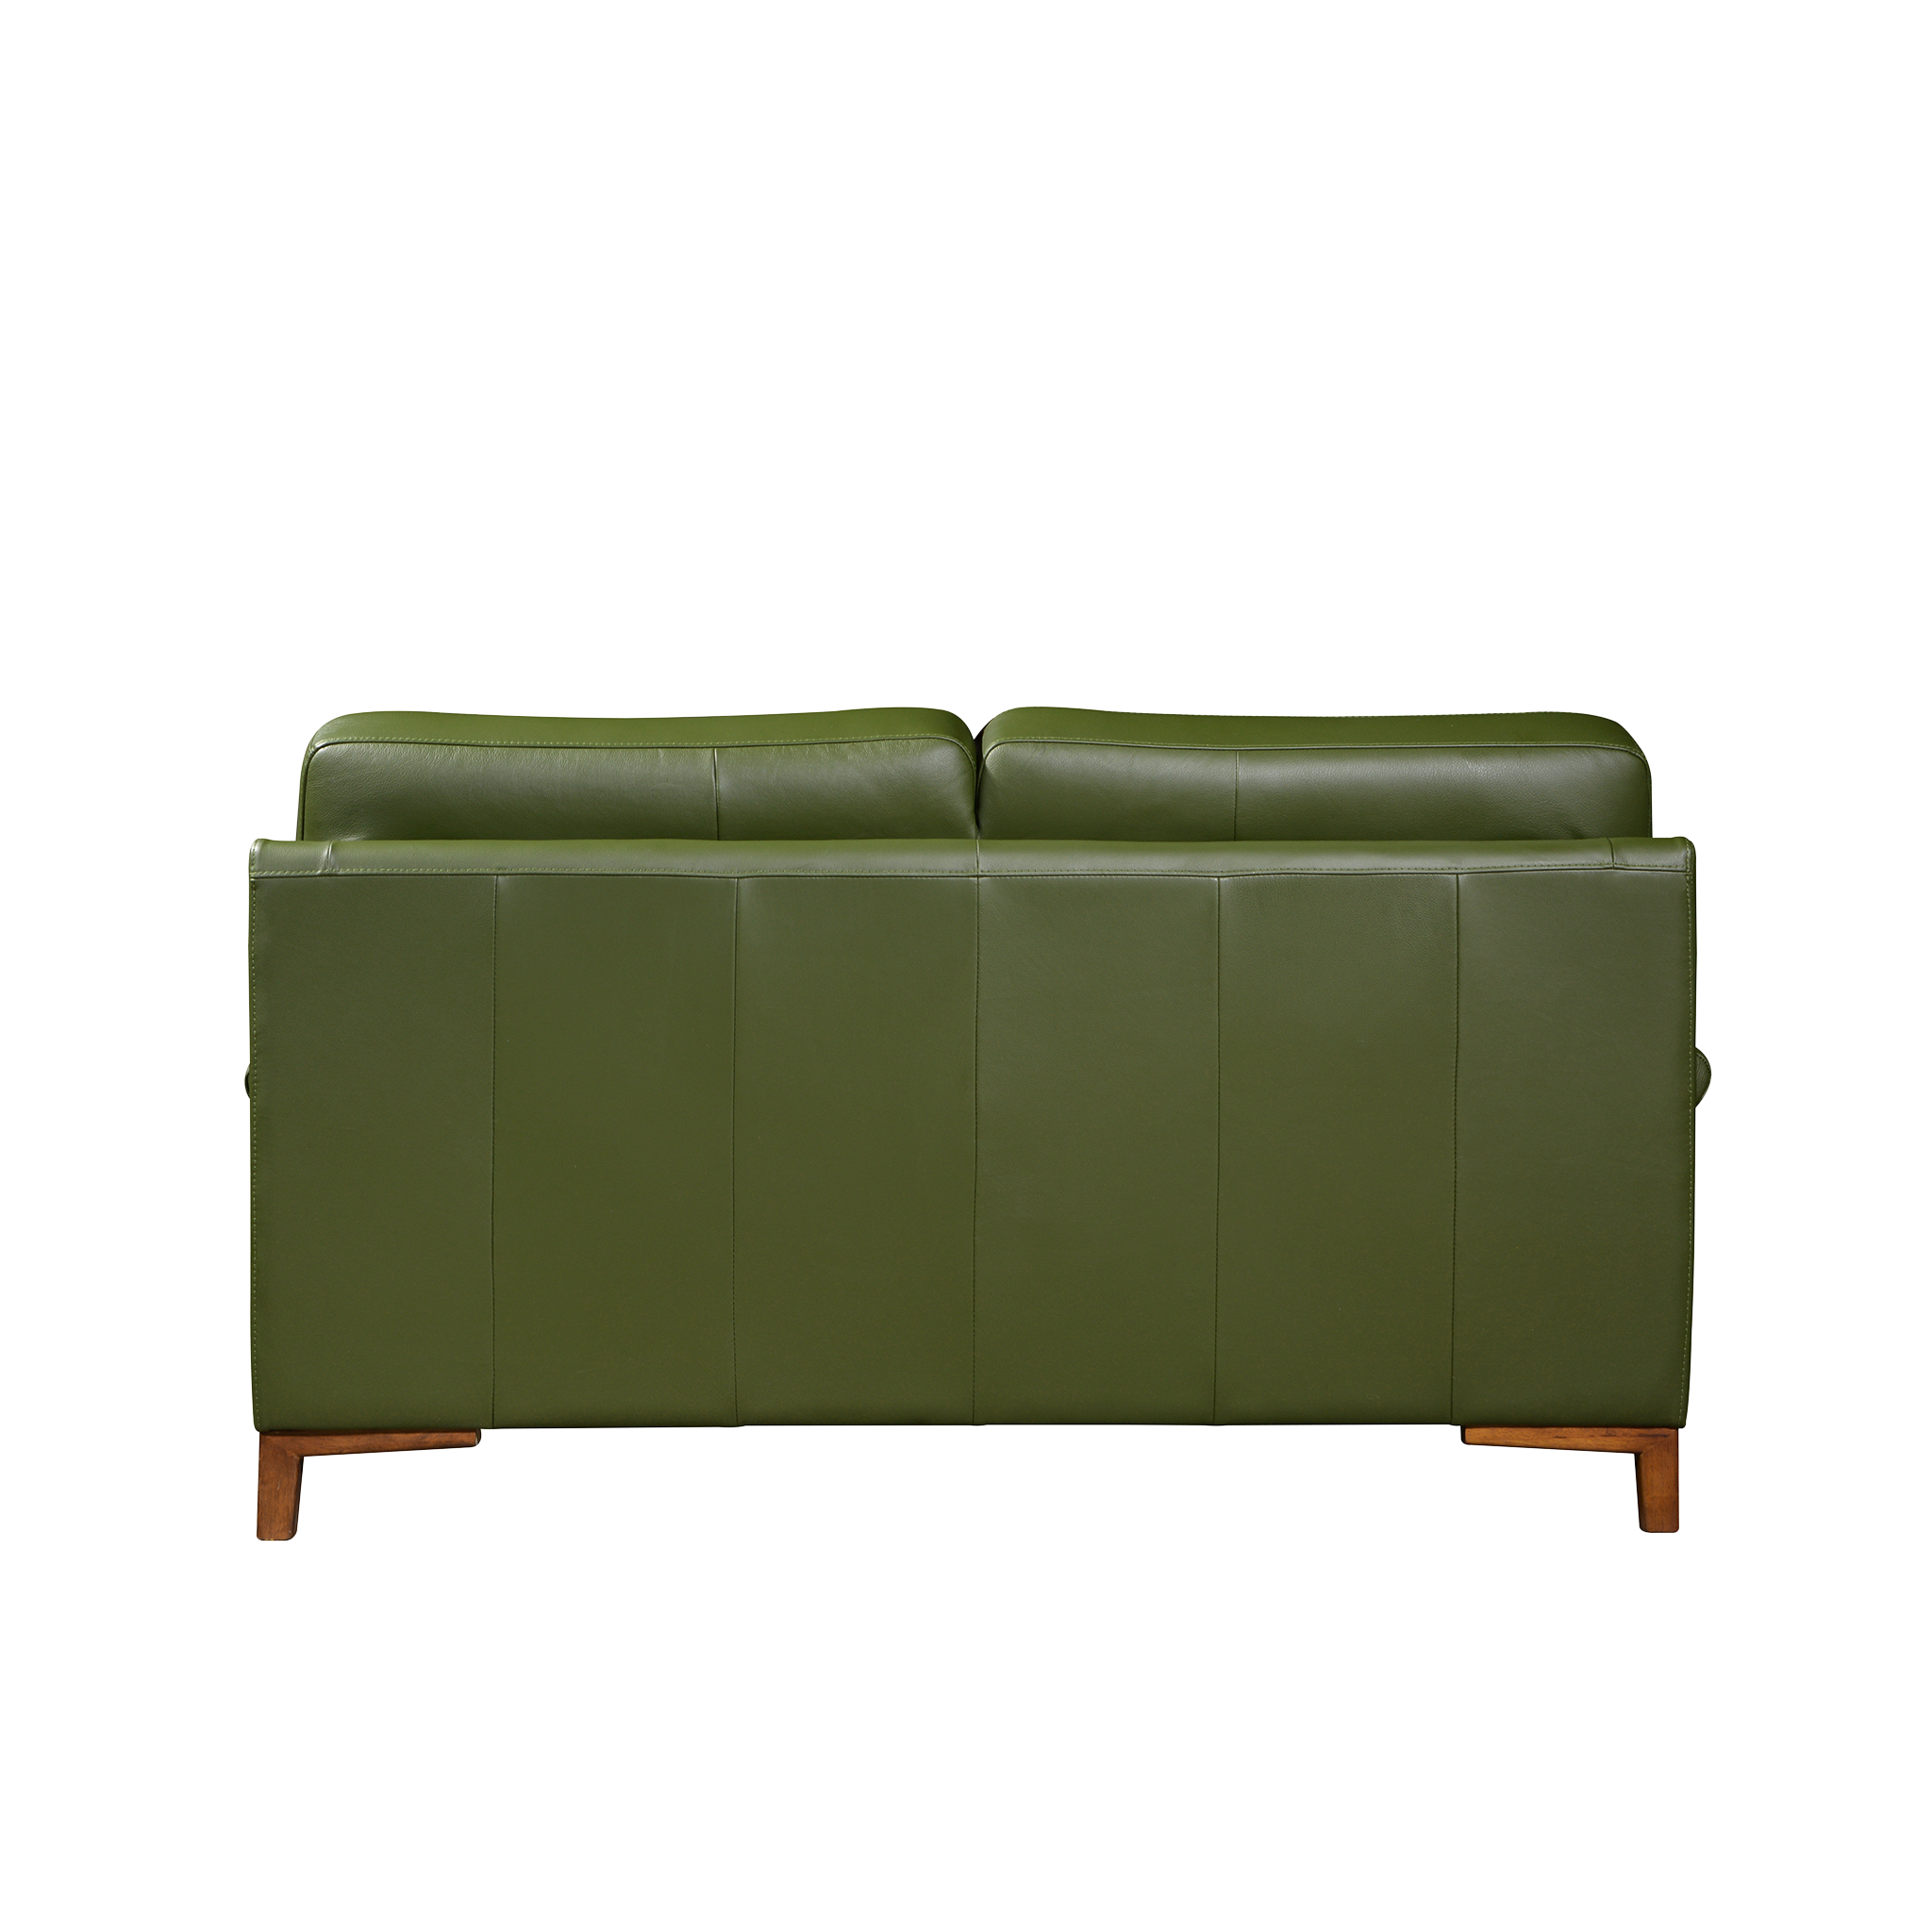 Ravenna 2 Seater Sofa, Full Leather